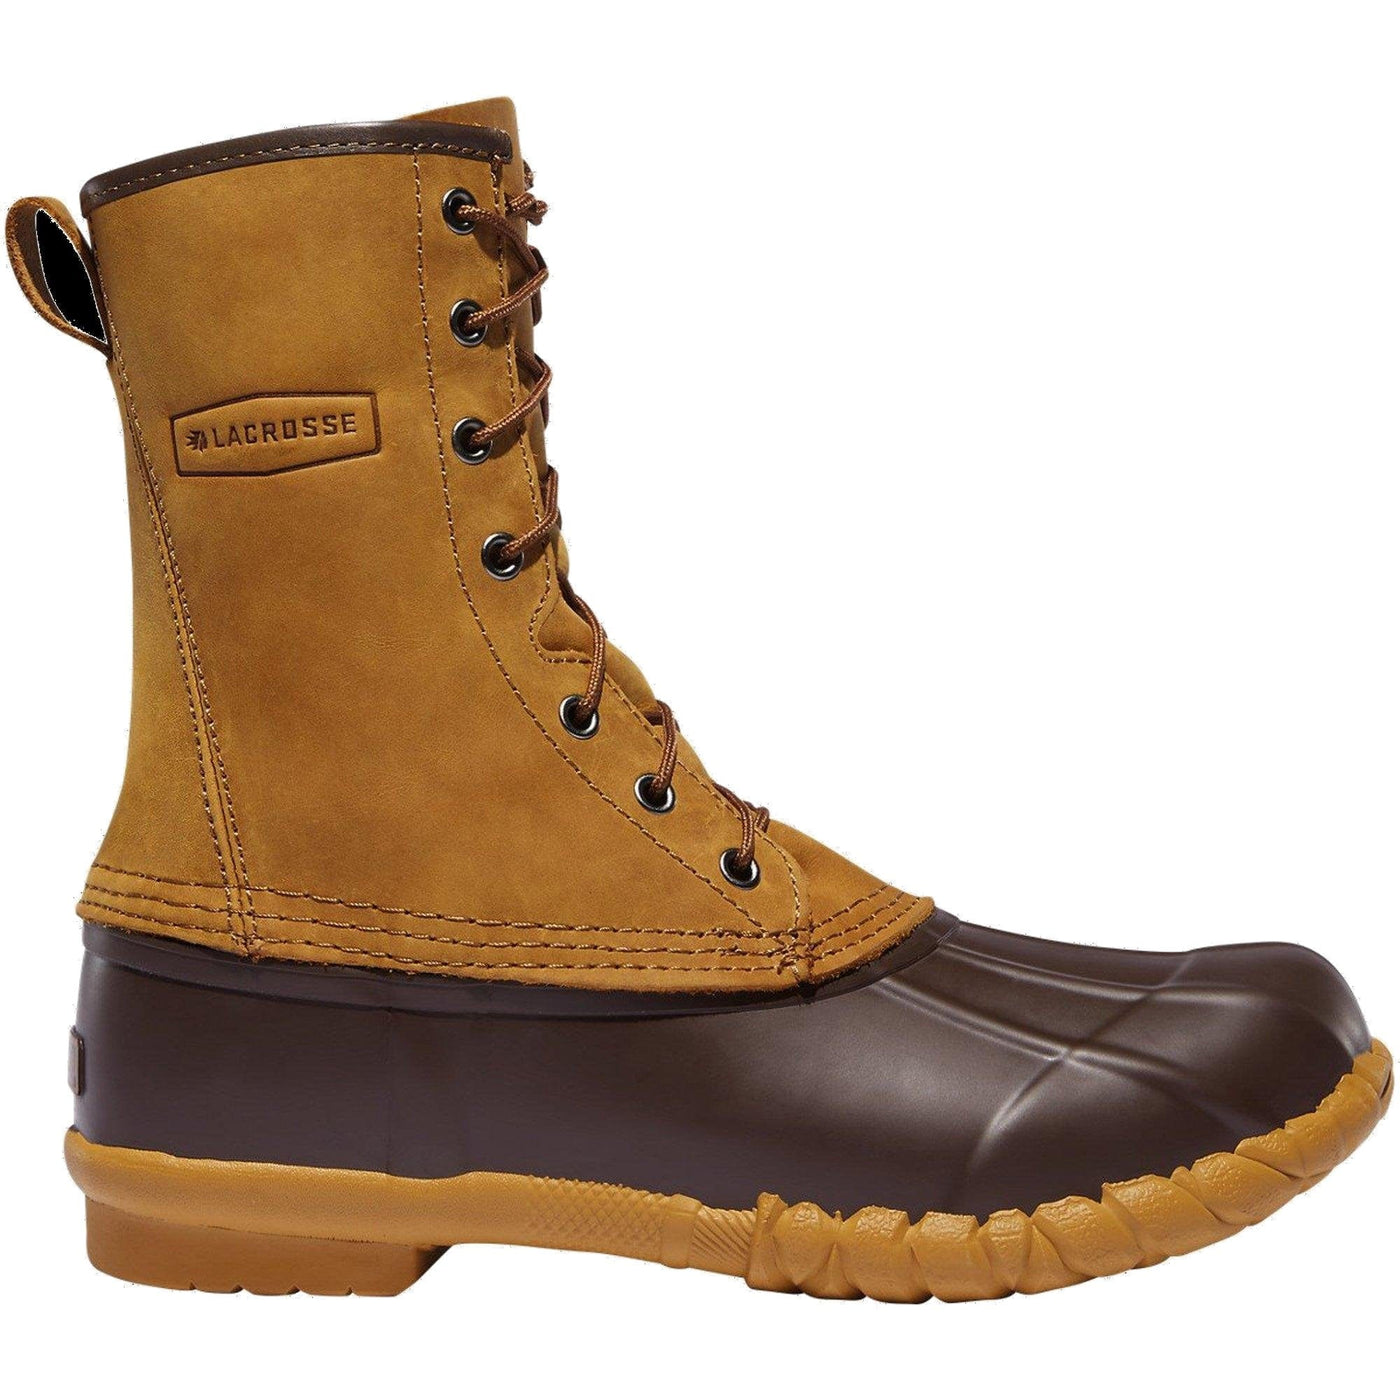 Lacrosse-Uplander-II-10-brown-boots